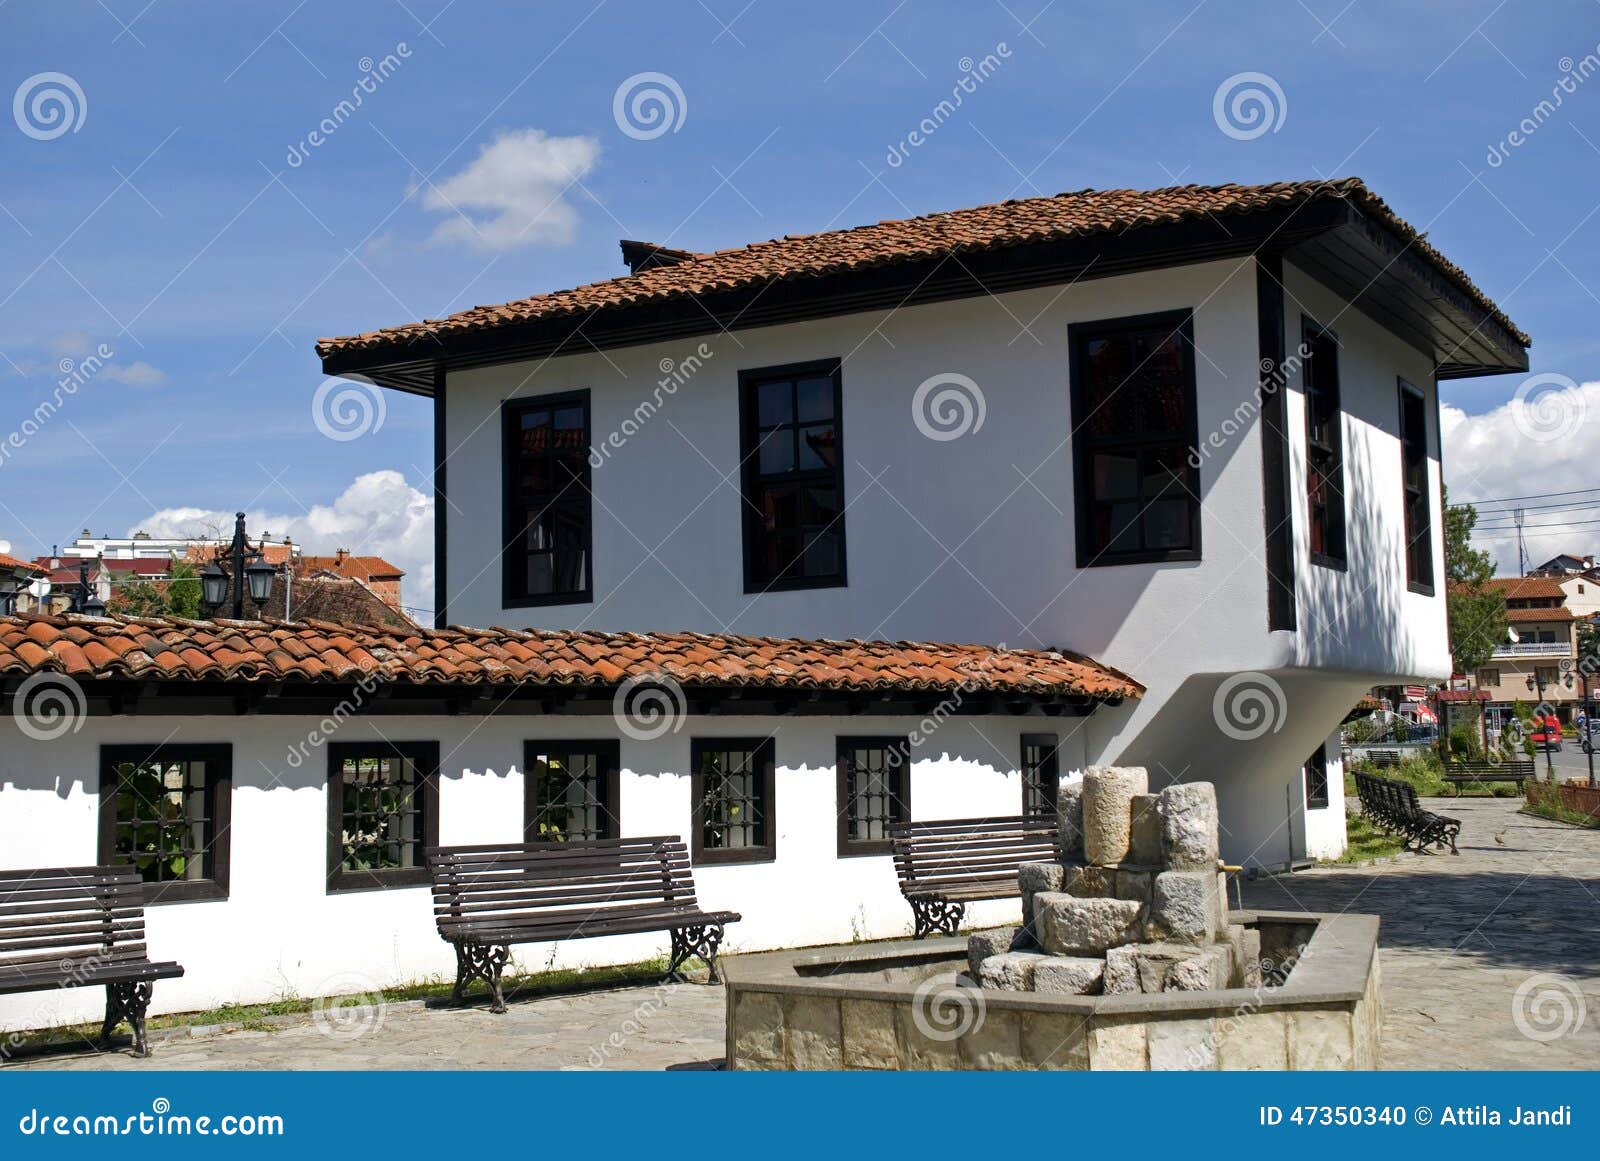 league of prizren house, prizren, kosovo